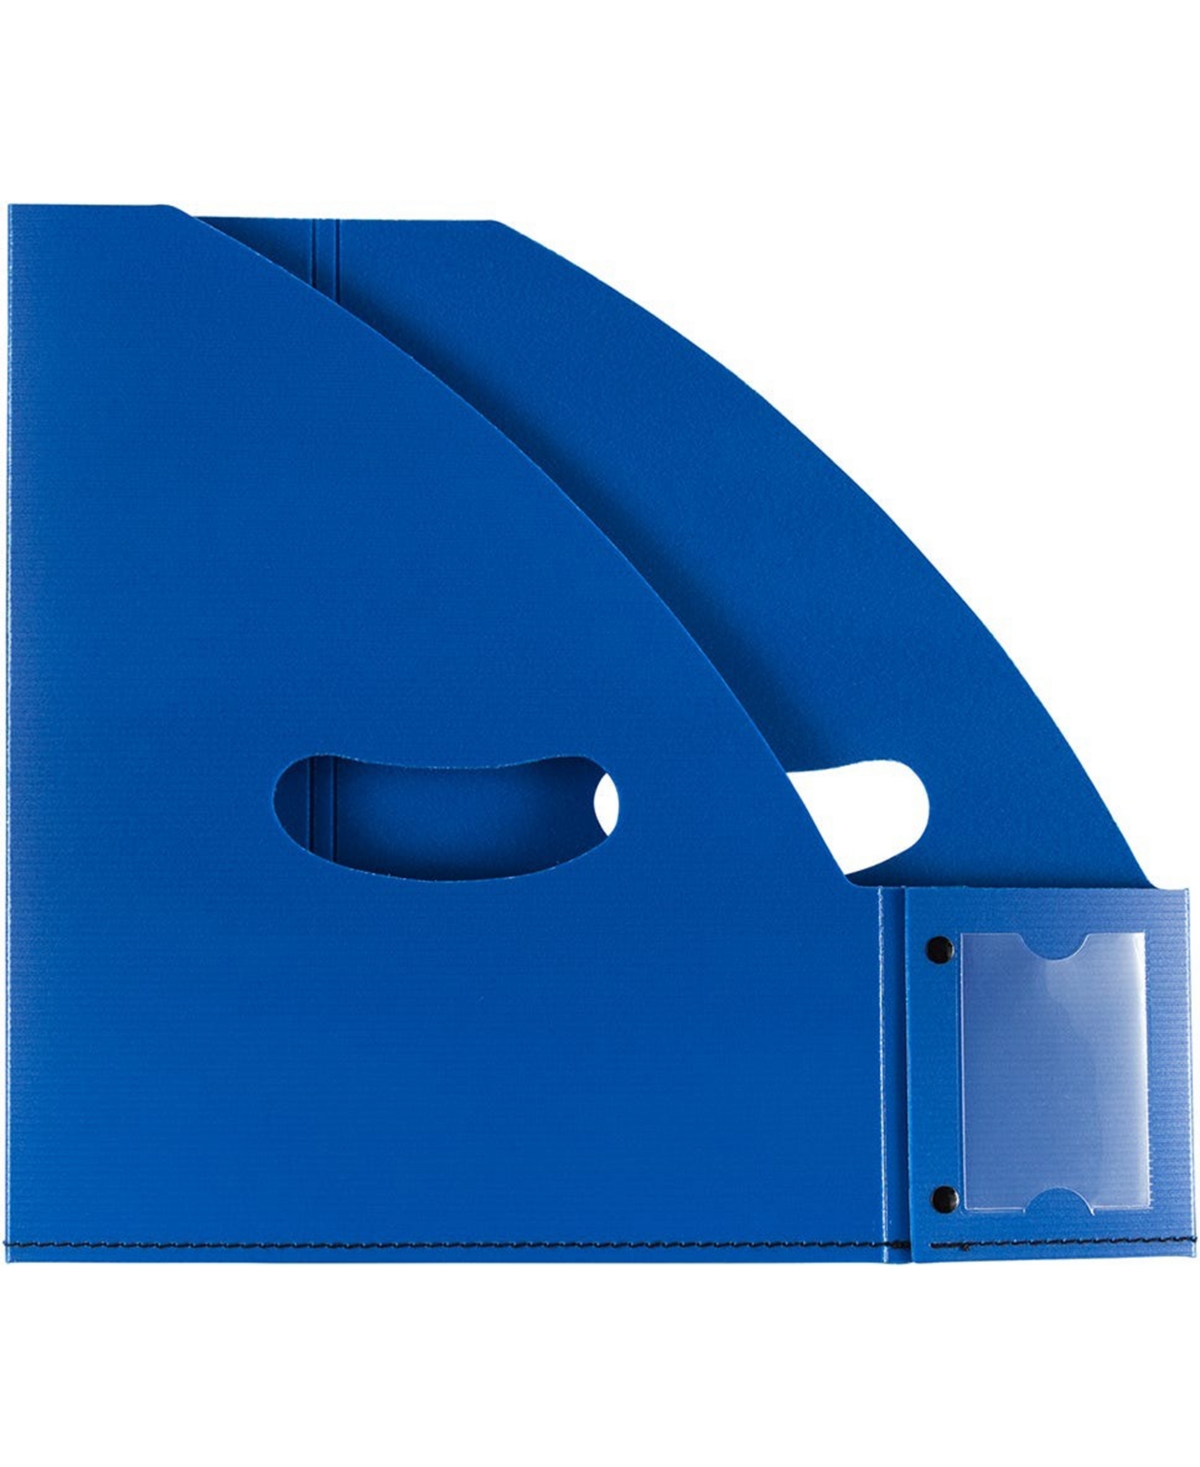 Plastic Magazine File Holder - 4 x 10.5 x 12 - Sold Individually - Blue